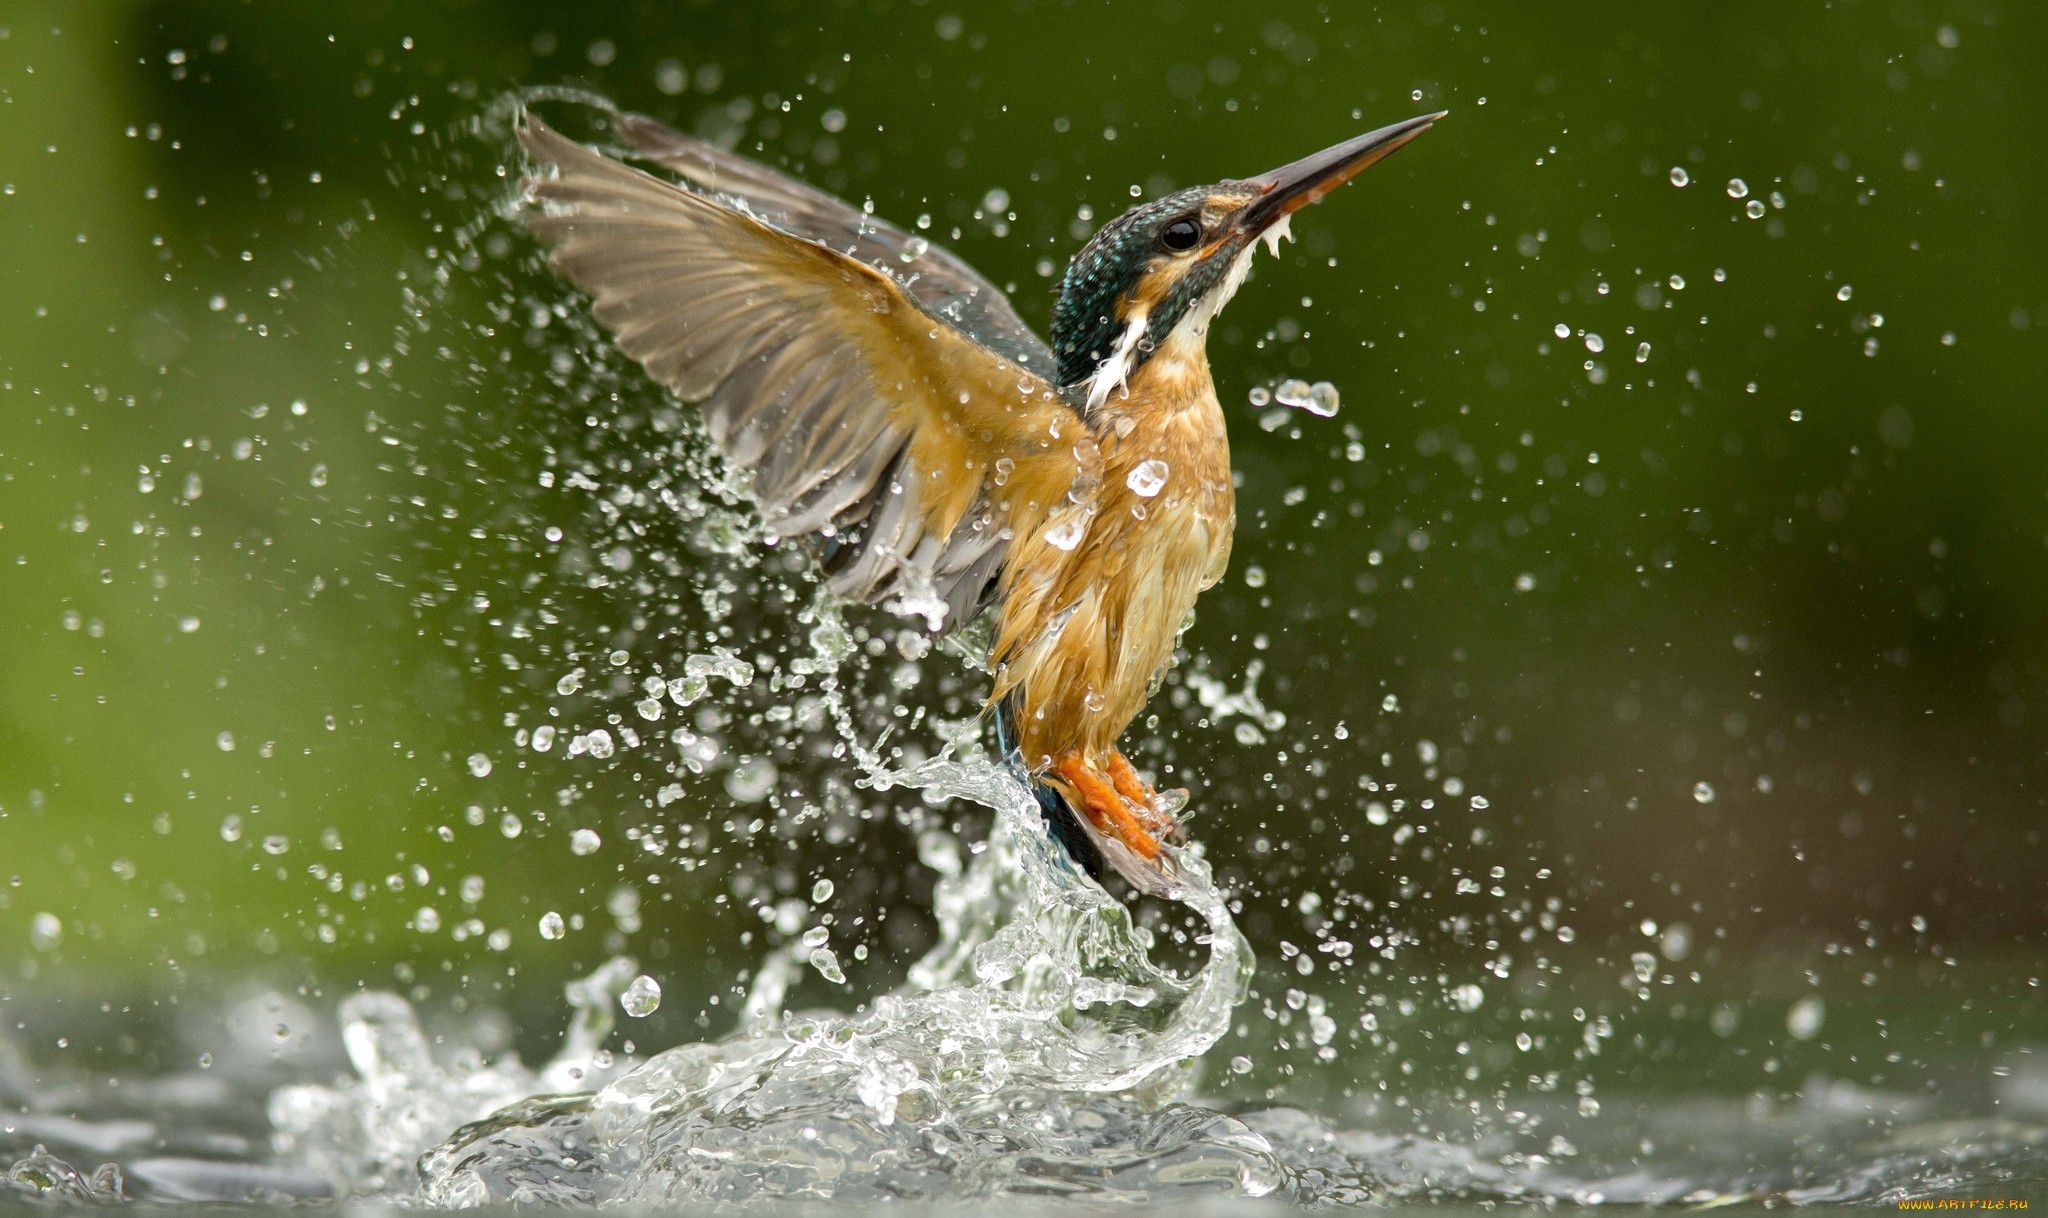 General 2048x1218 kingfisher animals birds nature water drops closeup